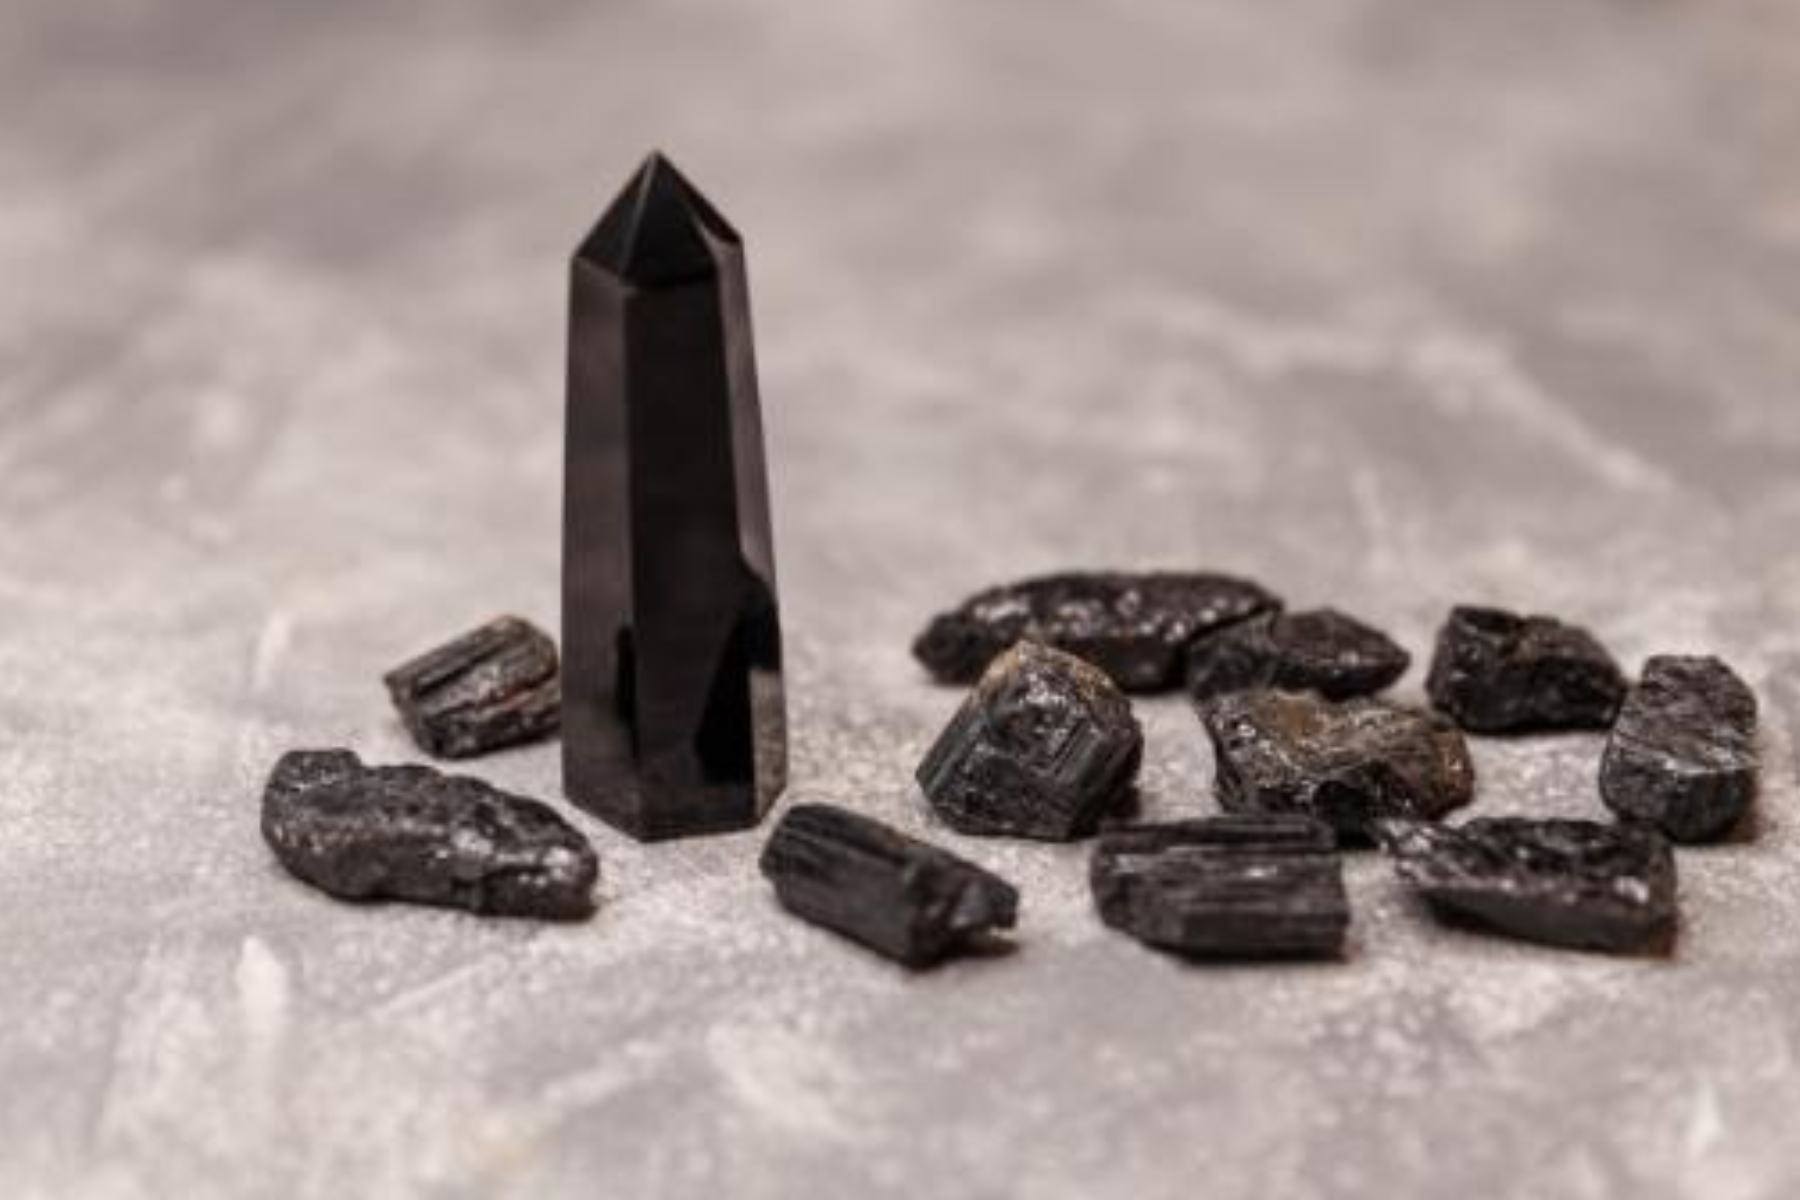 A group of black gemstones